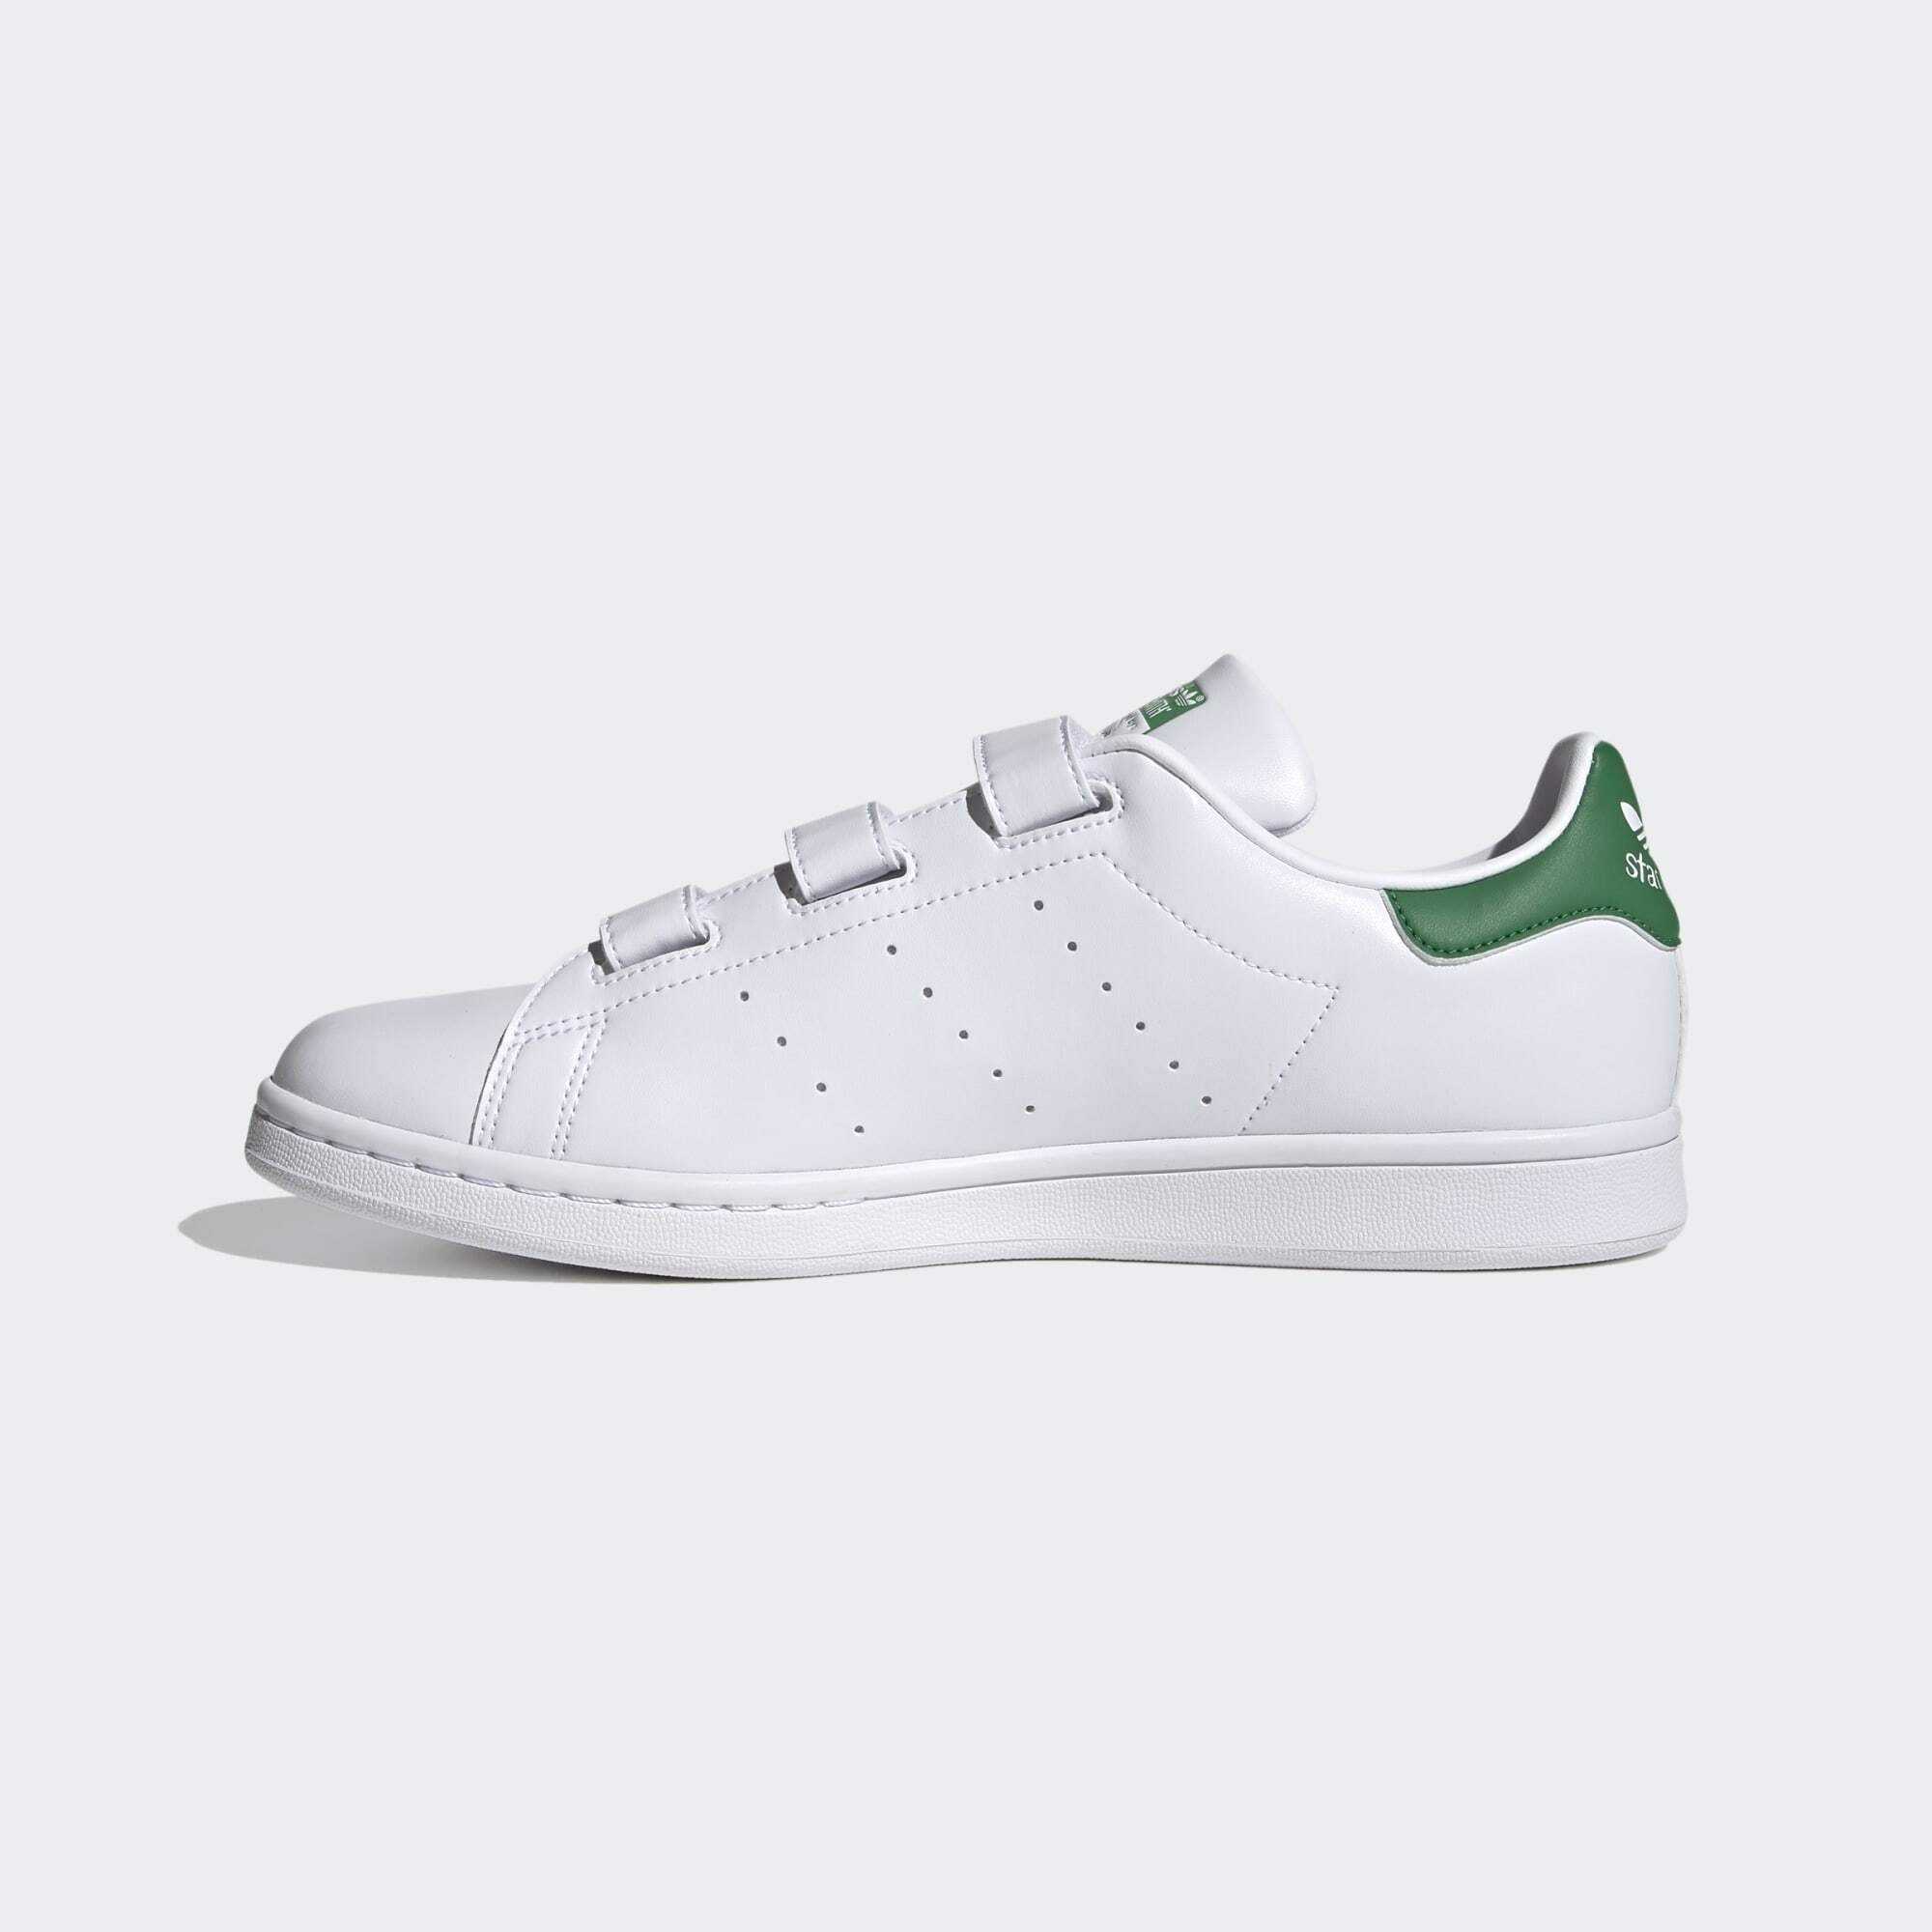 STAN / SMITH Originals Cloud White White adidas Cloud Green Sneaker / SCHUH